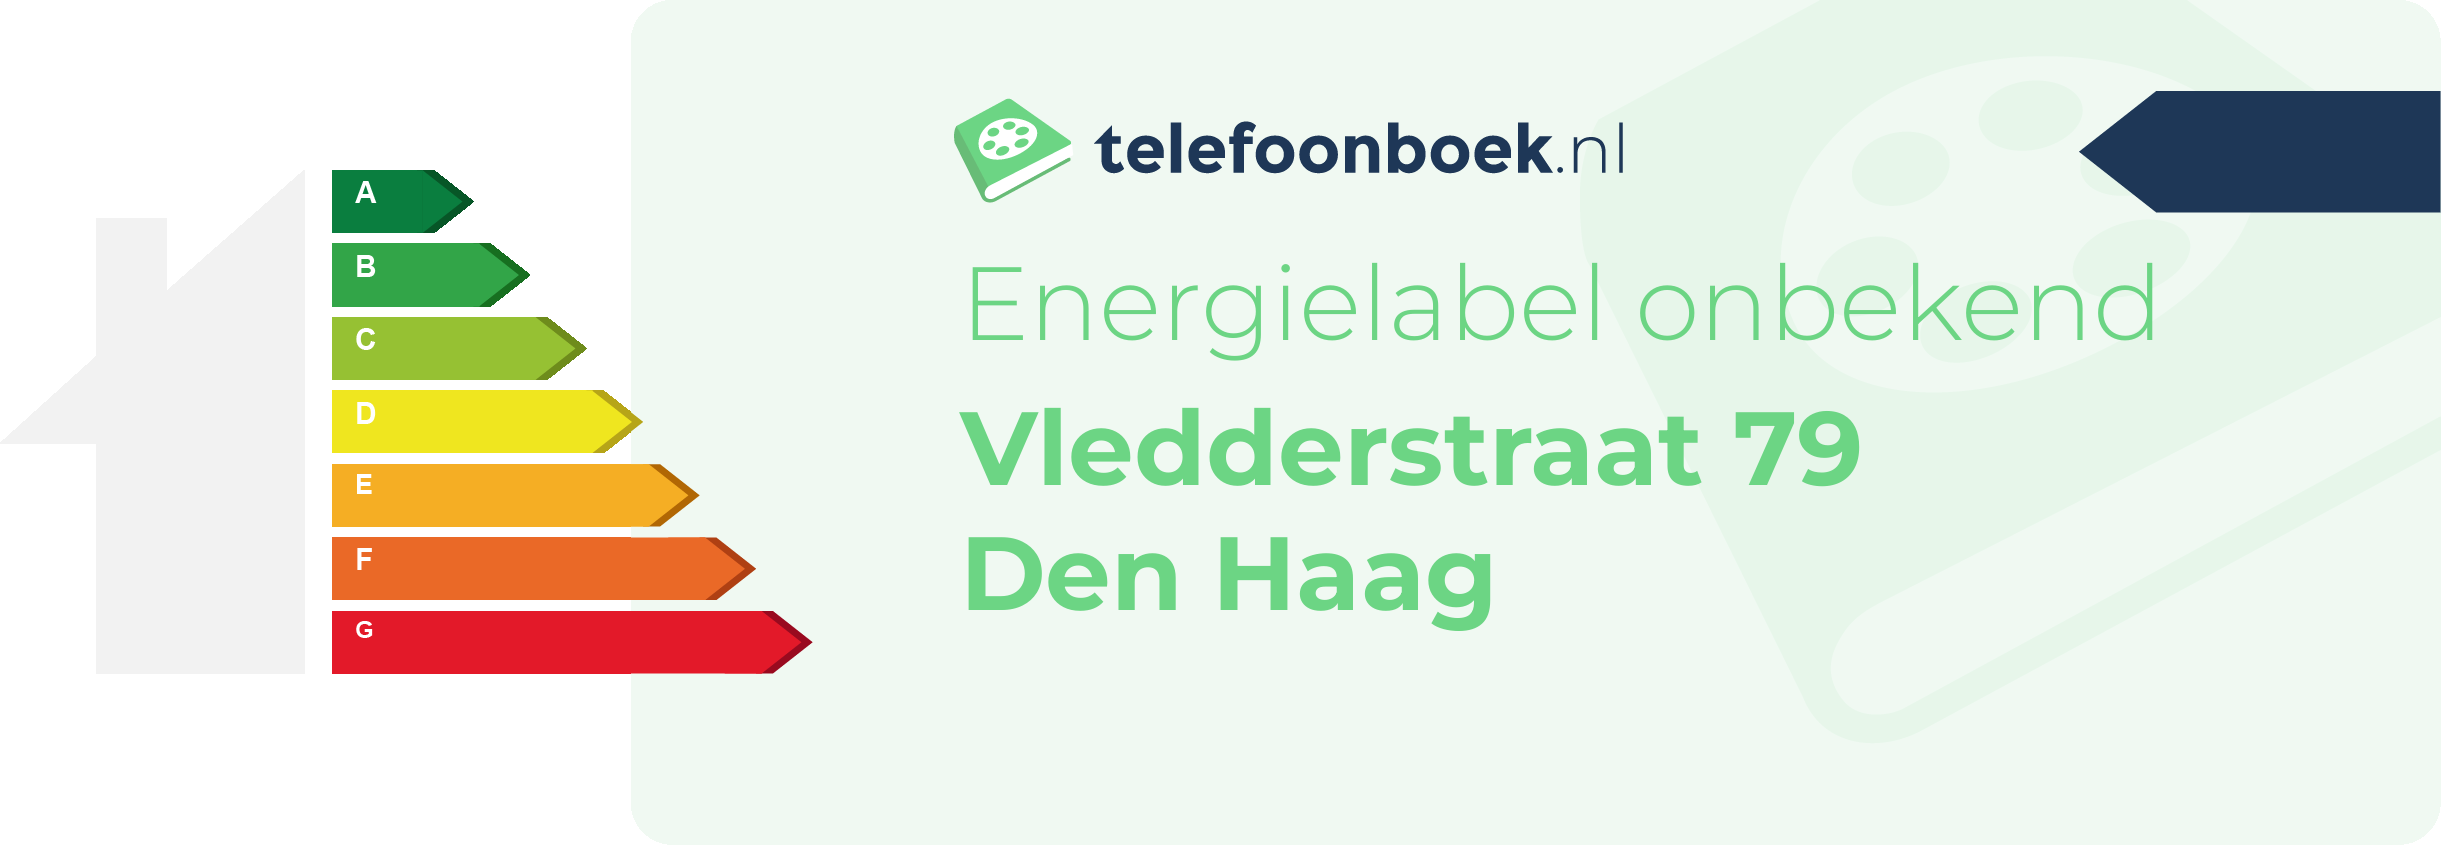 Energielabel Vledderstraat 79 Den Haag